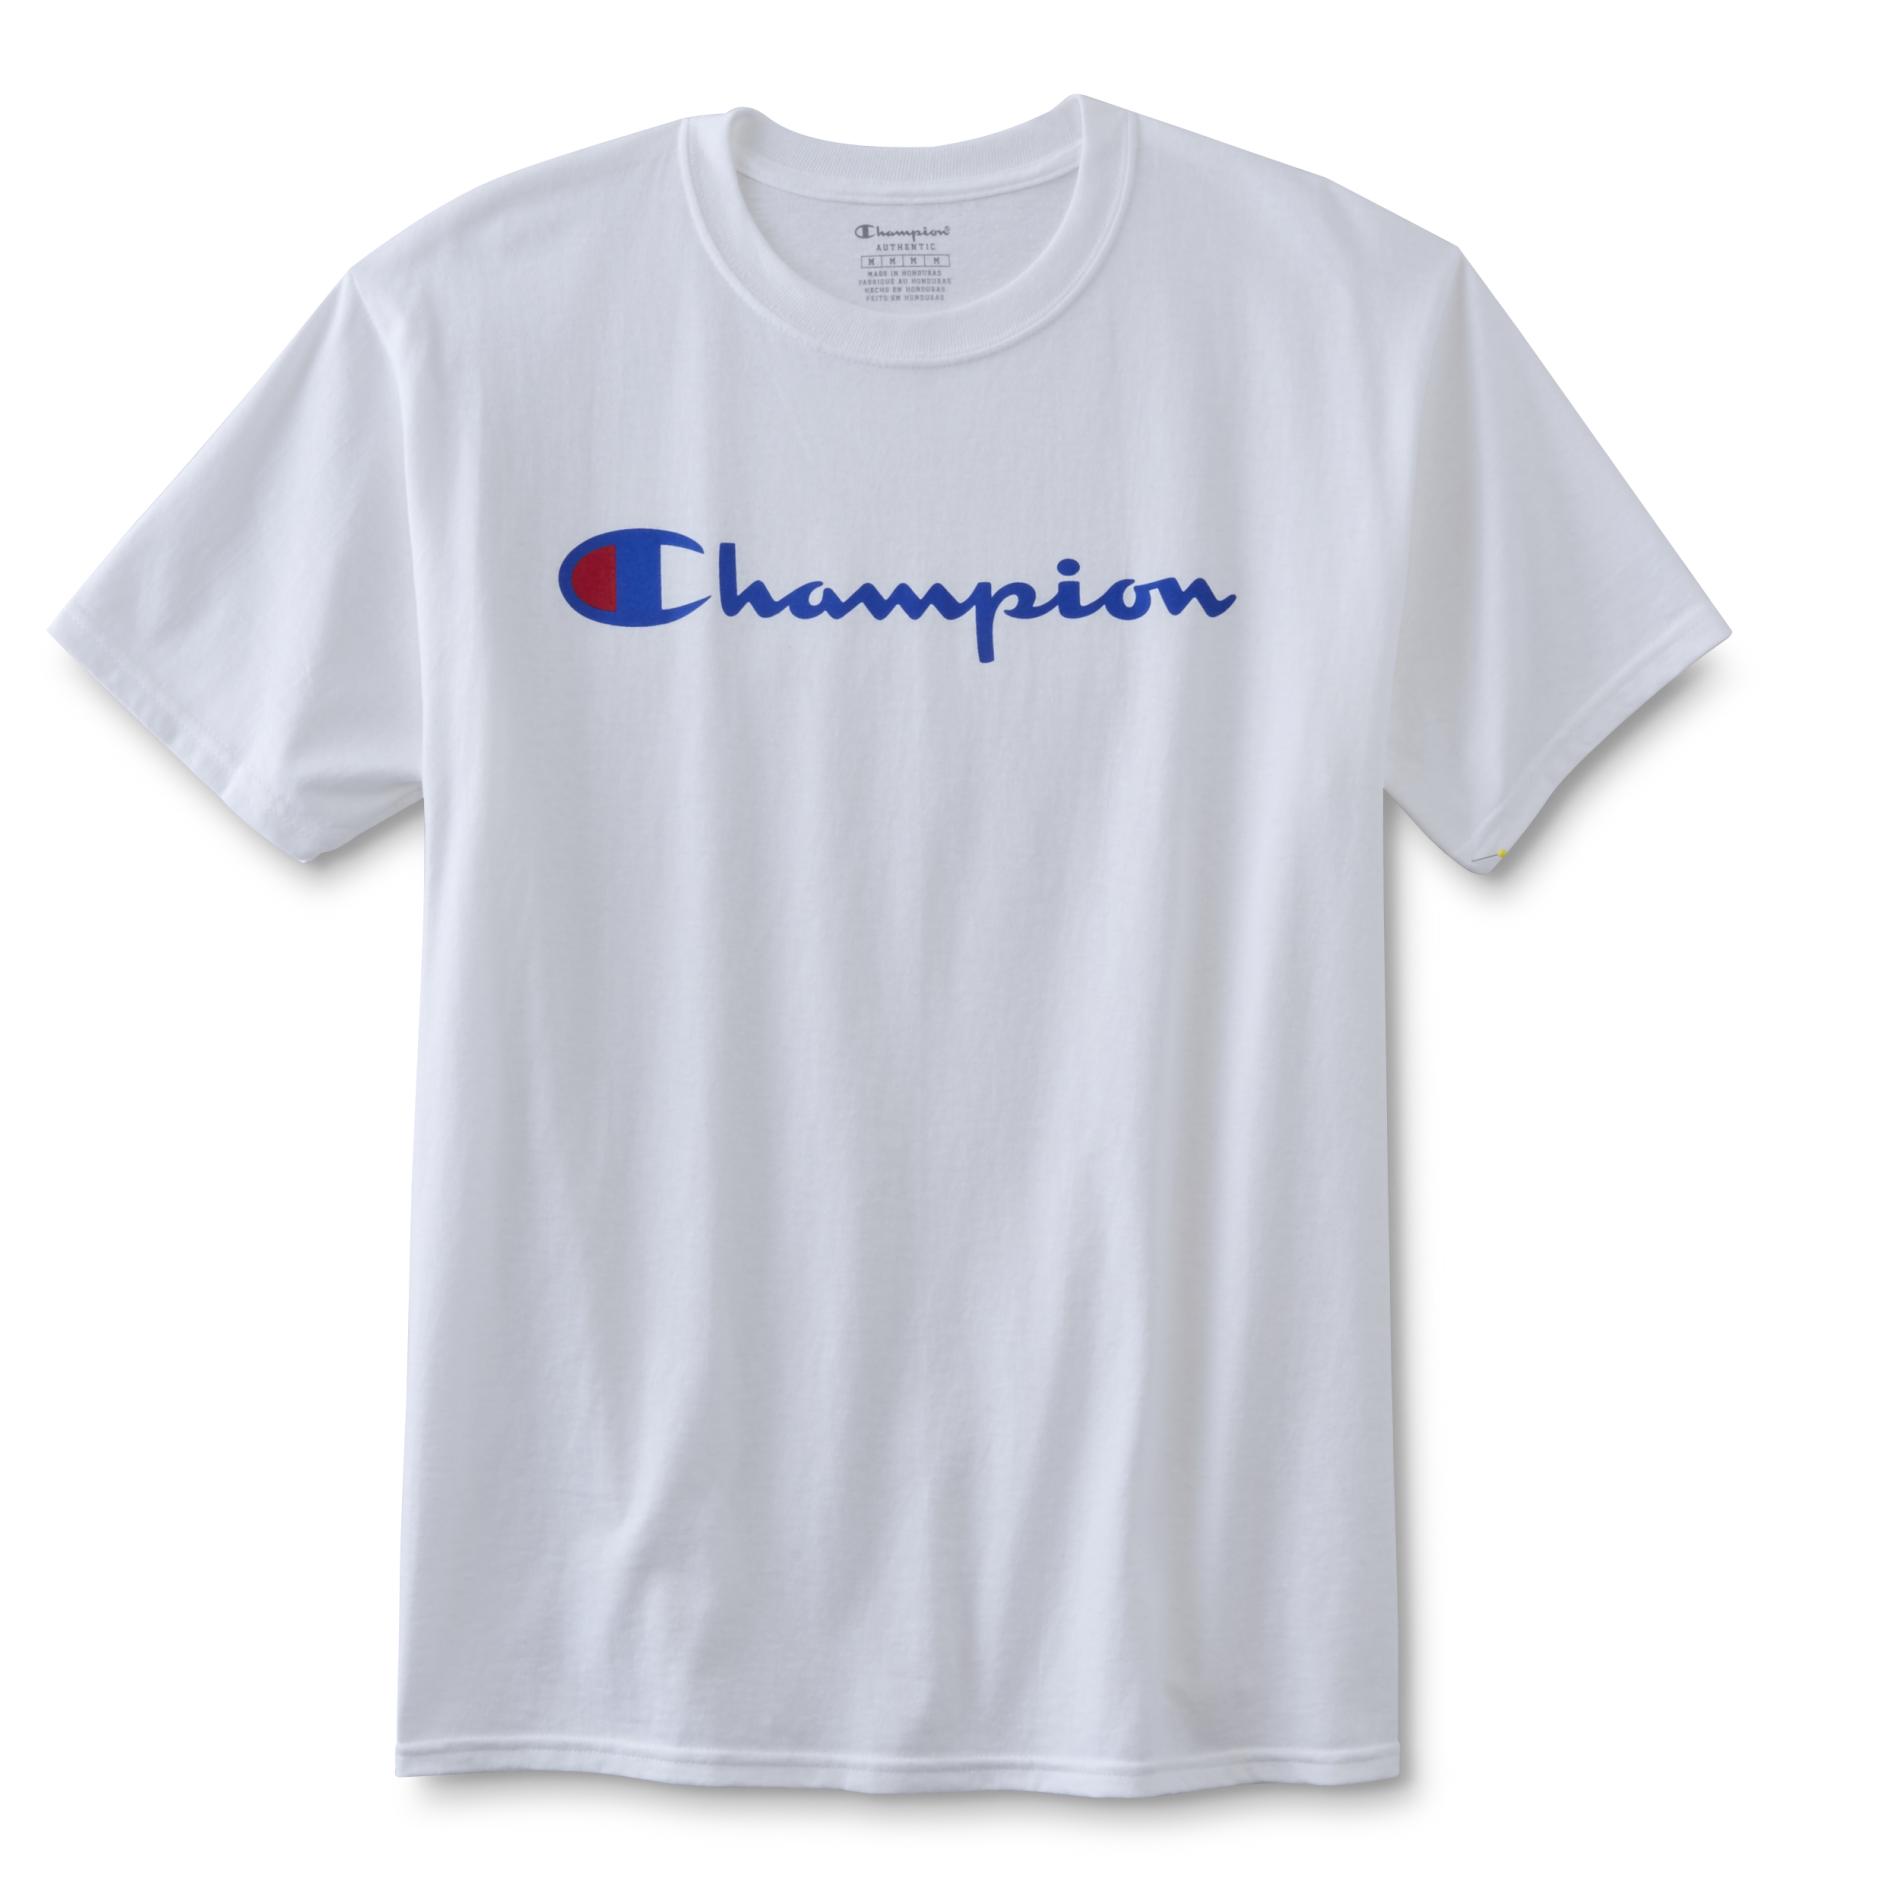 sears champion shirts